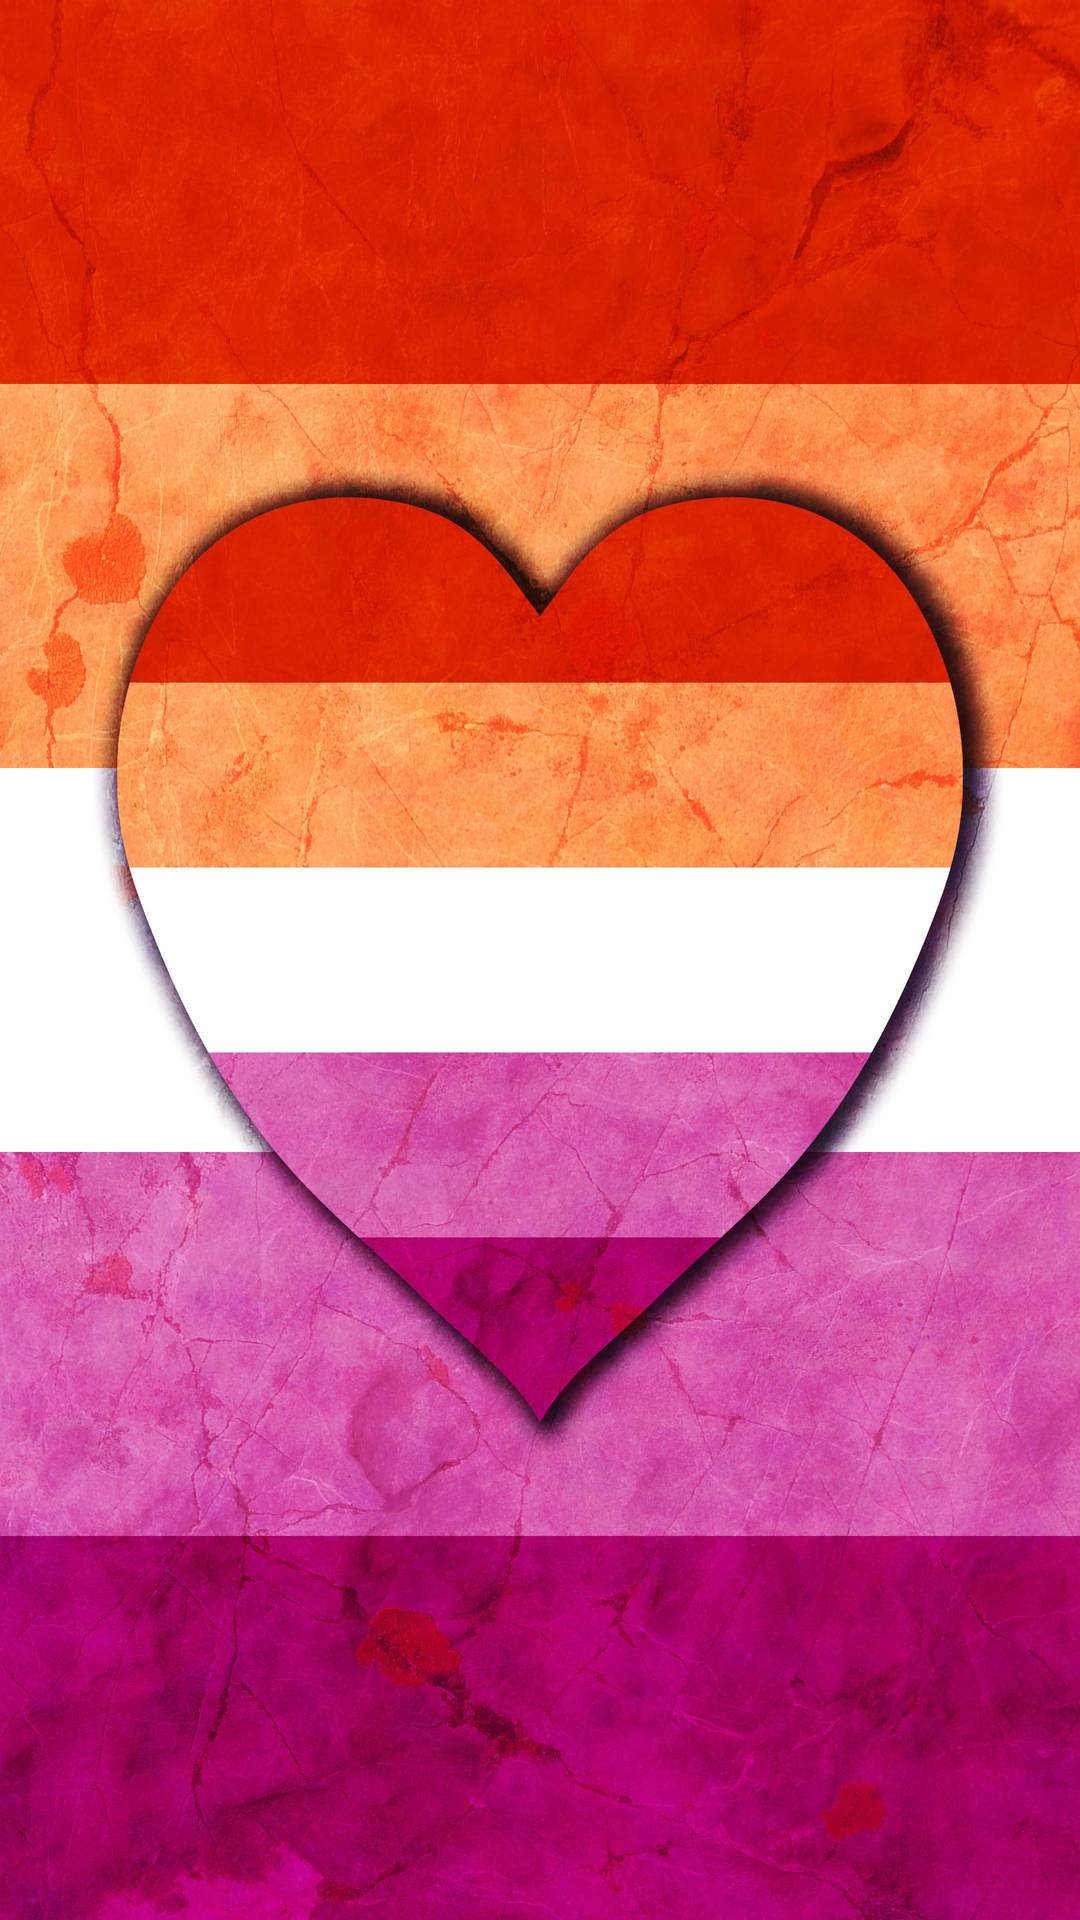 Lesbian Pride Flag In Heart Form